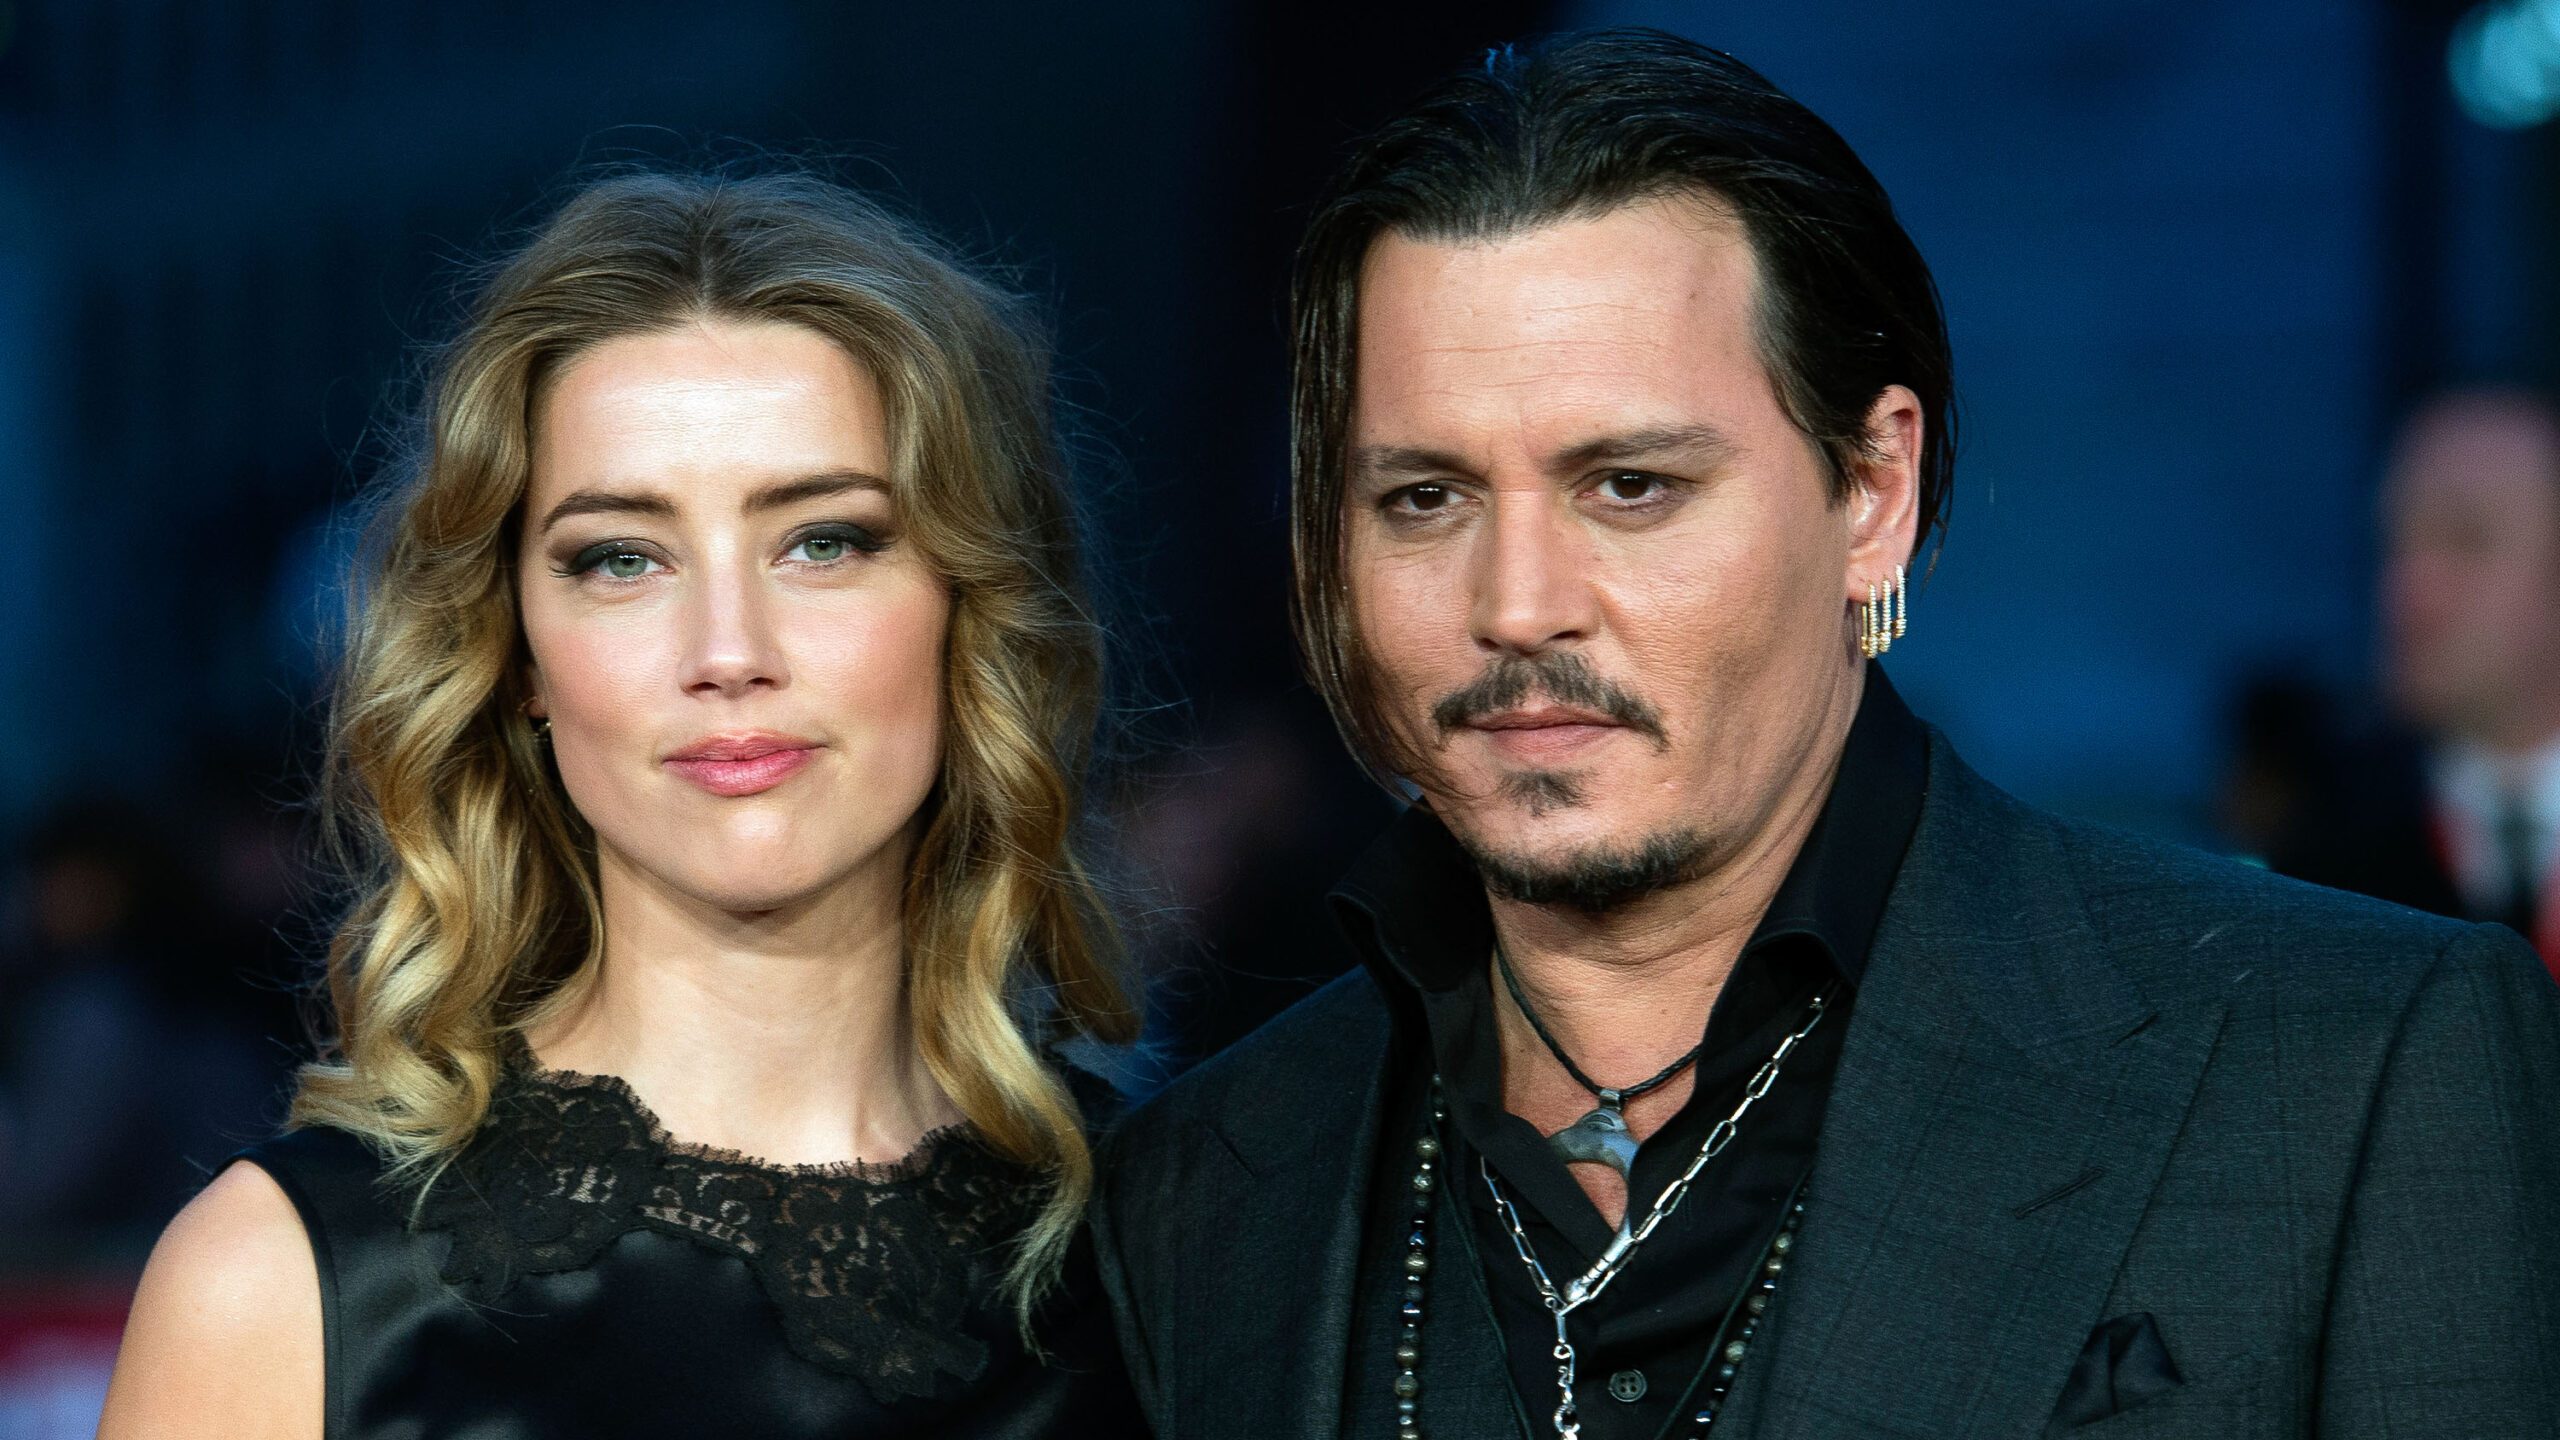 Johnny Depp’s wife, Amber Heard, claims domestic violence – media